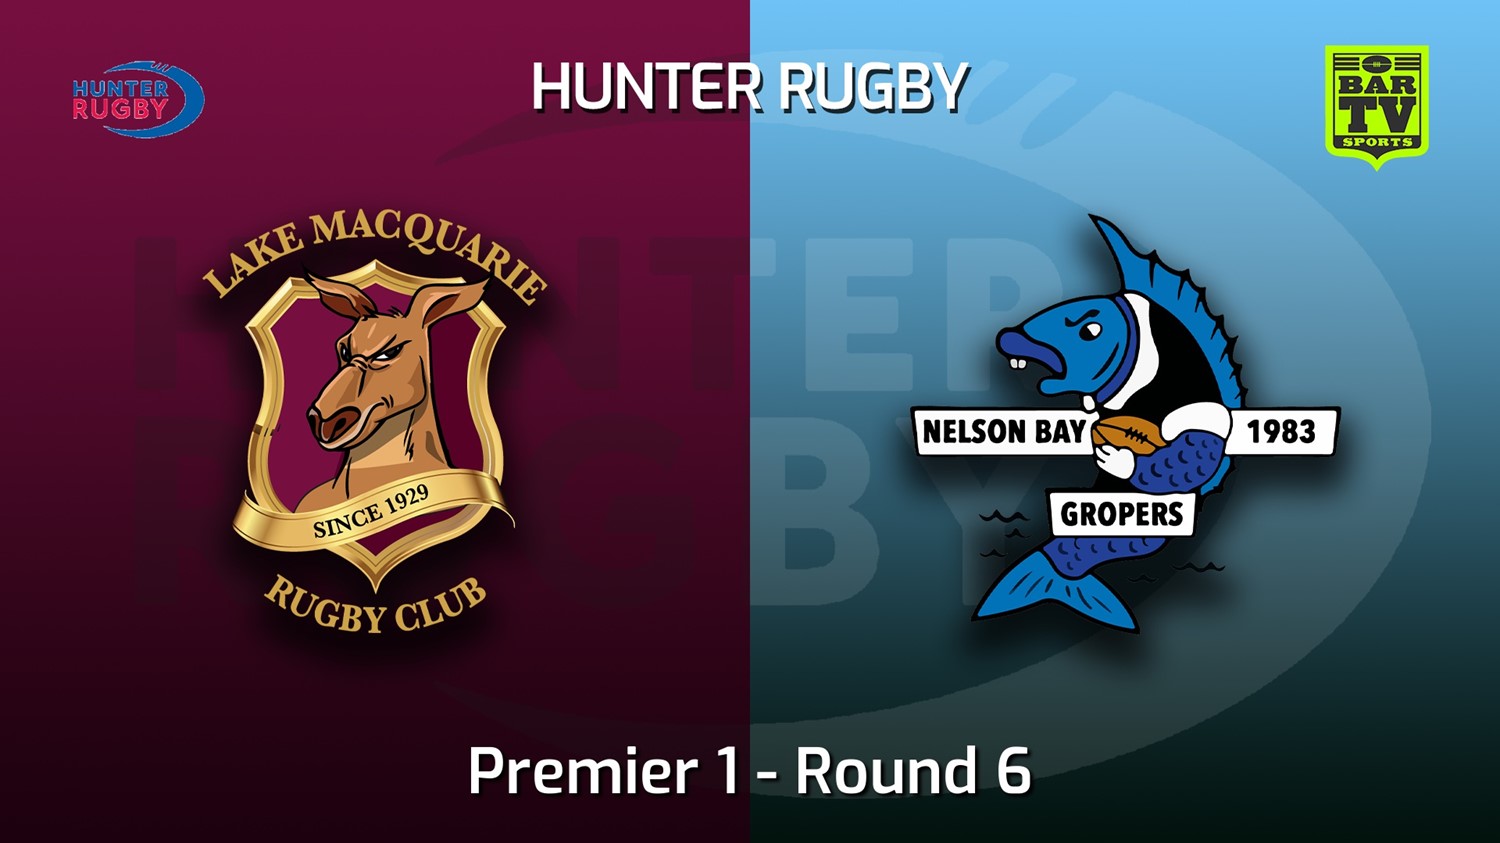 220528-Hunter Rugby Round 6 - Premier 1 - Lake Macquarie v Nelson Bay Gropers Slate Image